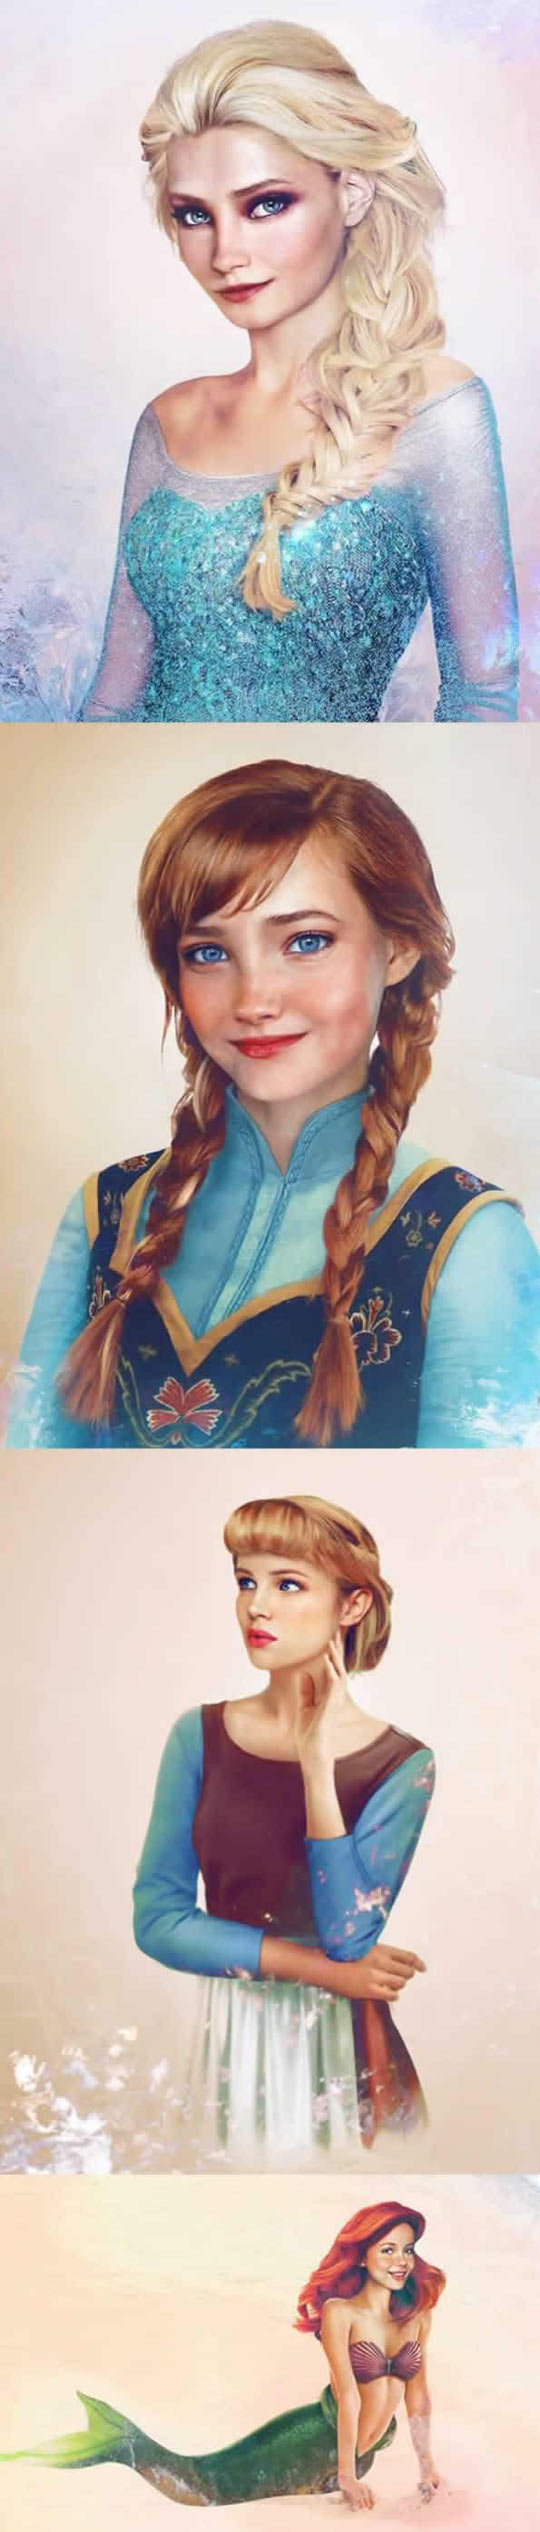 Realistic Disney Princesses